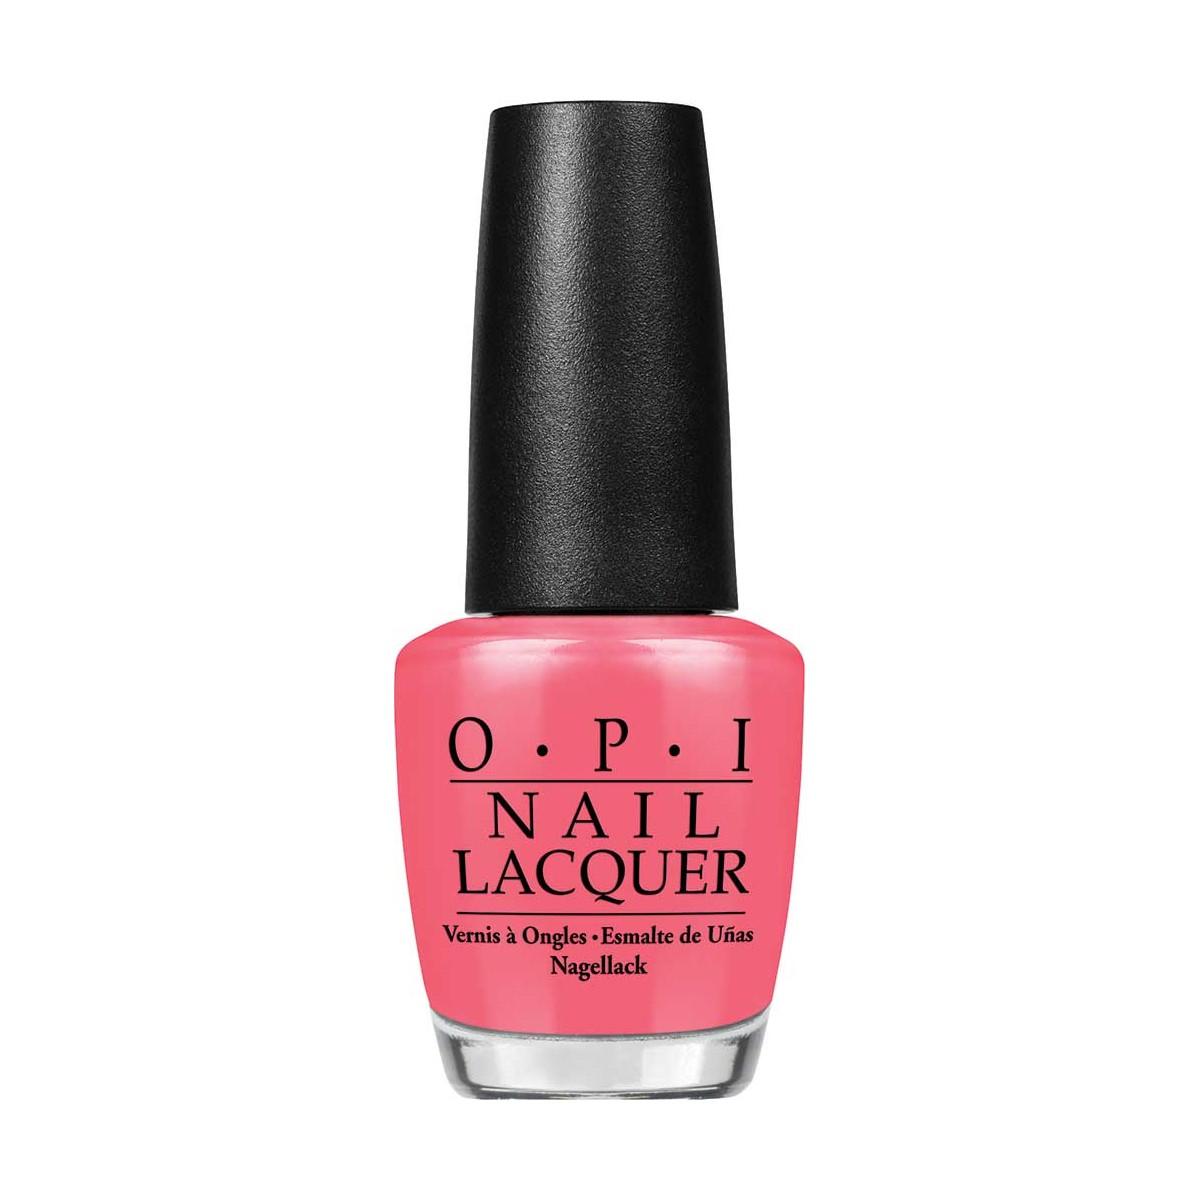 opi-nail-lacquer-nli42-elephantastic-pink